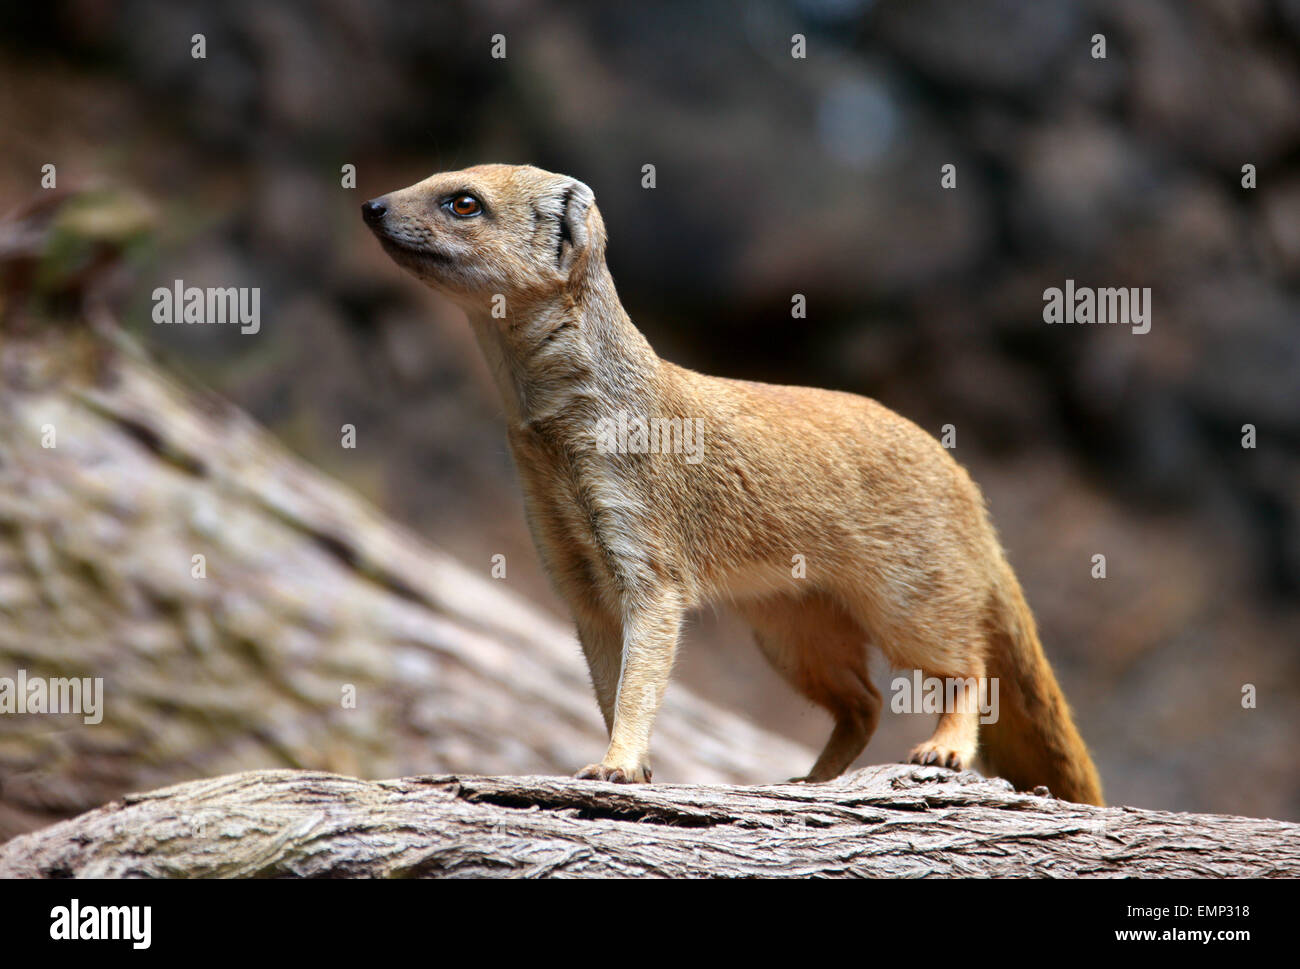 Yellow Mongoose, Cynictis penicillata, Herpestinae, Herpestidae, Carnivora, Mammalia. Sometimes referred to as the red meerkat. Stock Photo